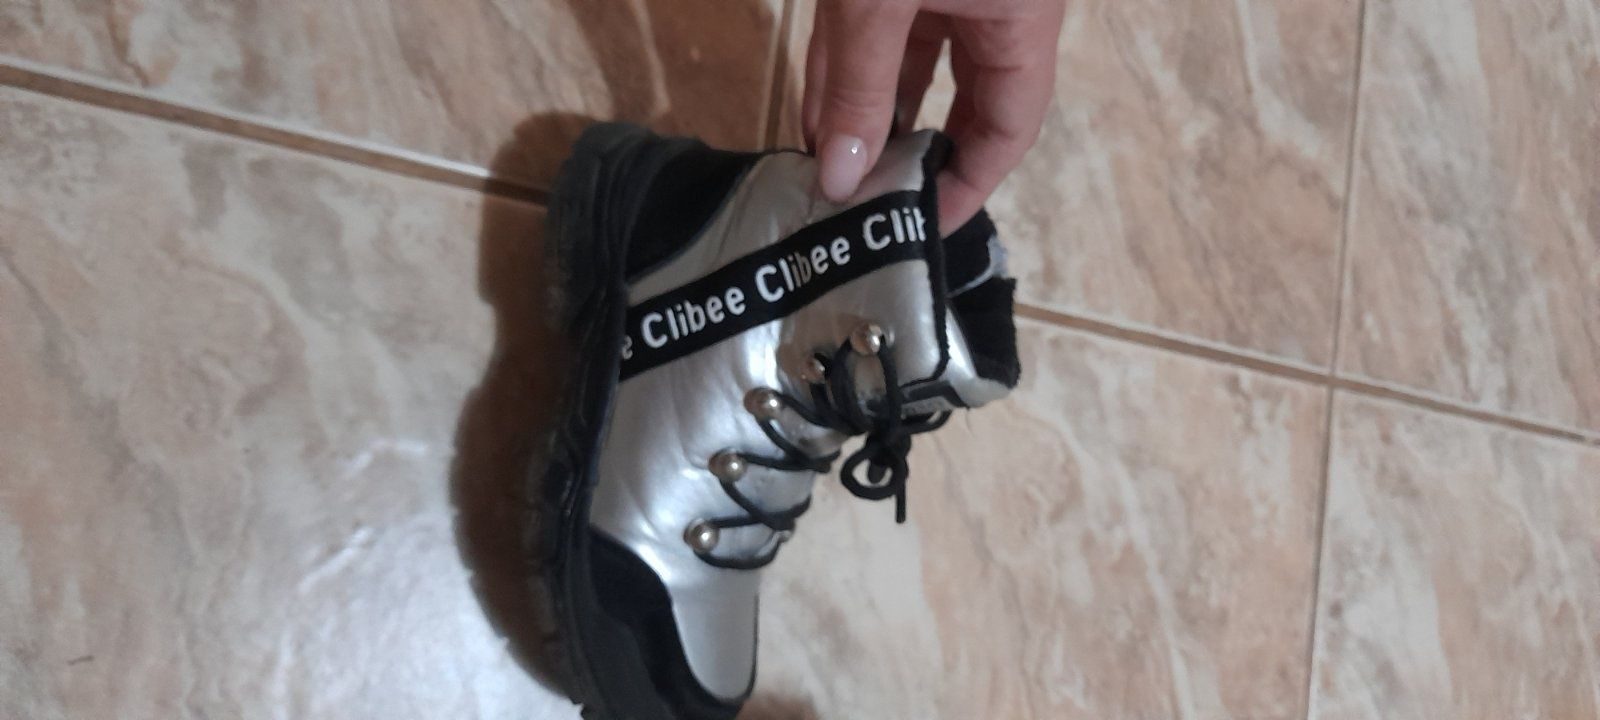 Дитячі ботинки, дутики, сапожки Clibee